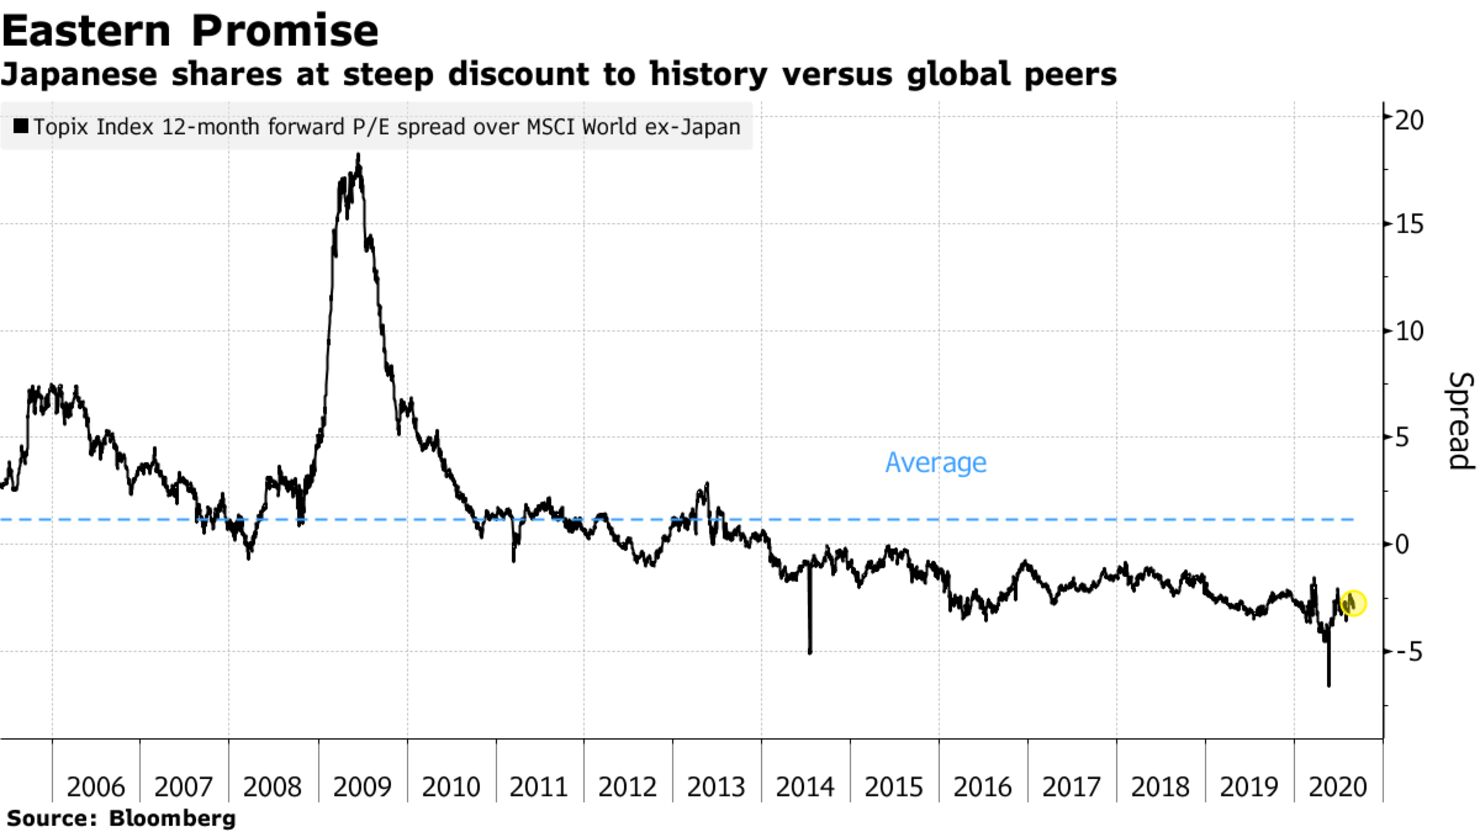 Japanese shares at steep discount to history versus global peers